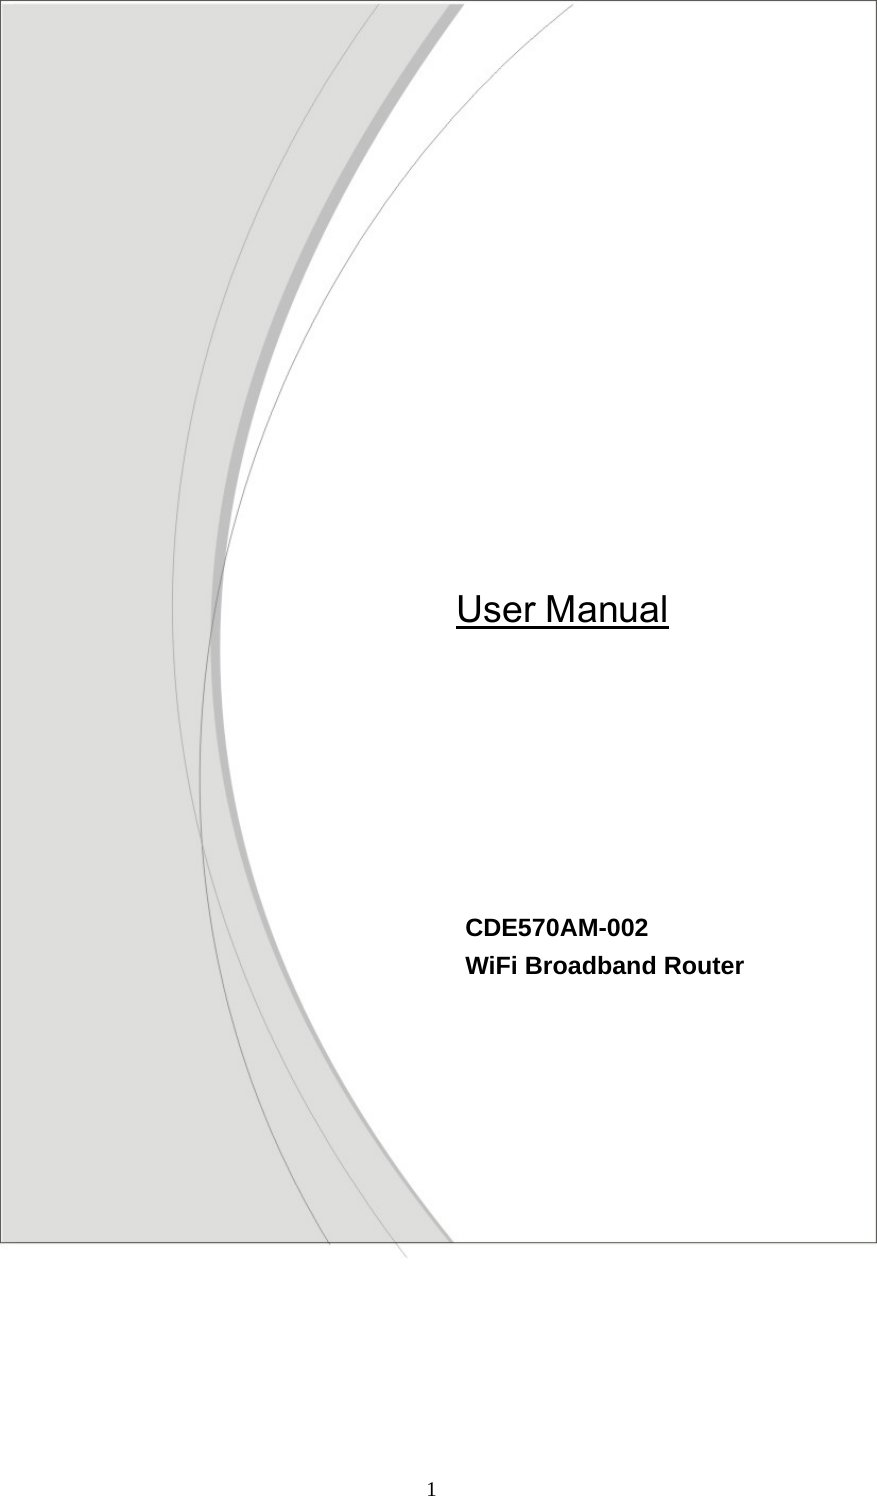  1  User Manual  CDE570AM-002  WiFi Broadband Router 